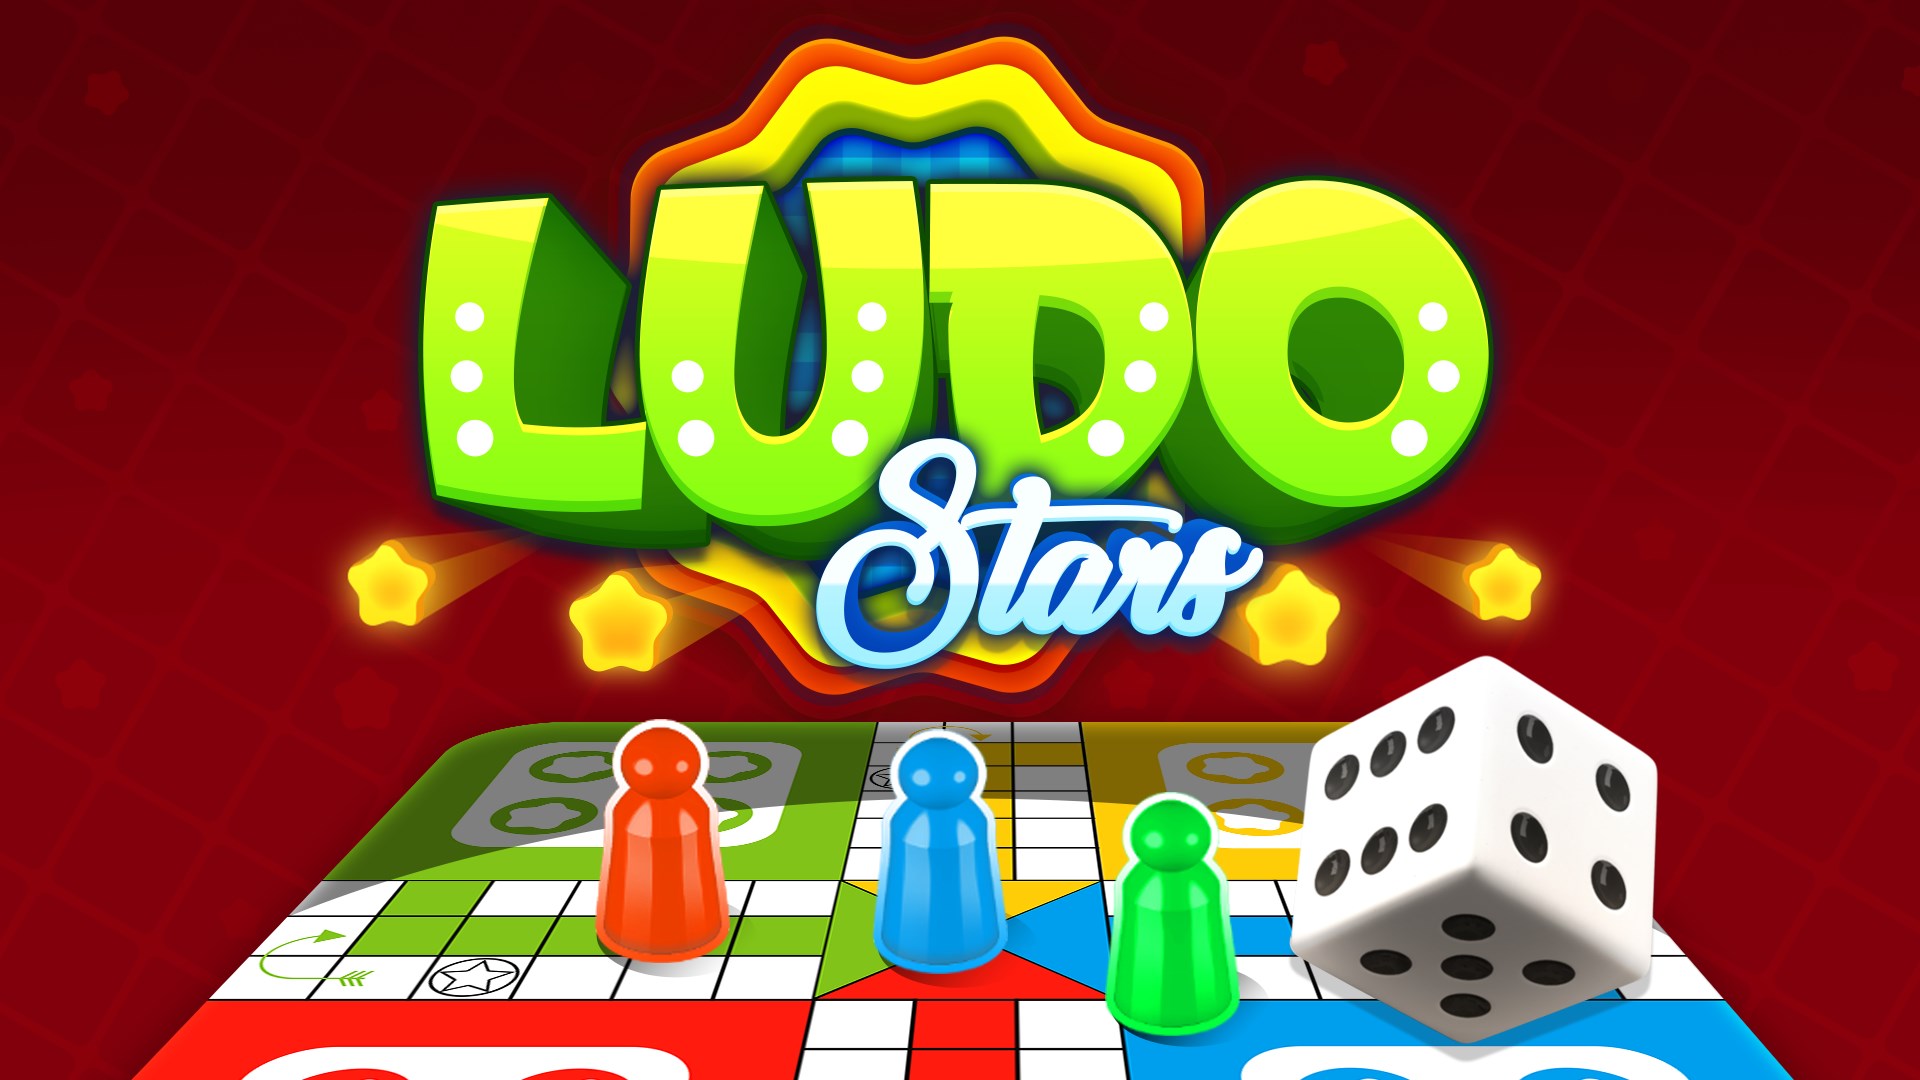 Get Ludo Multiplayer - Microsoft Store